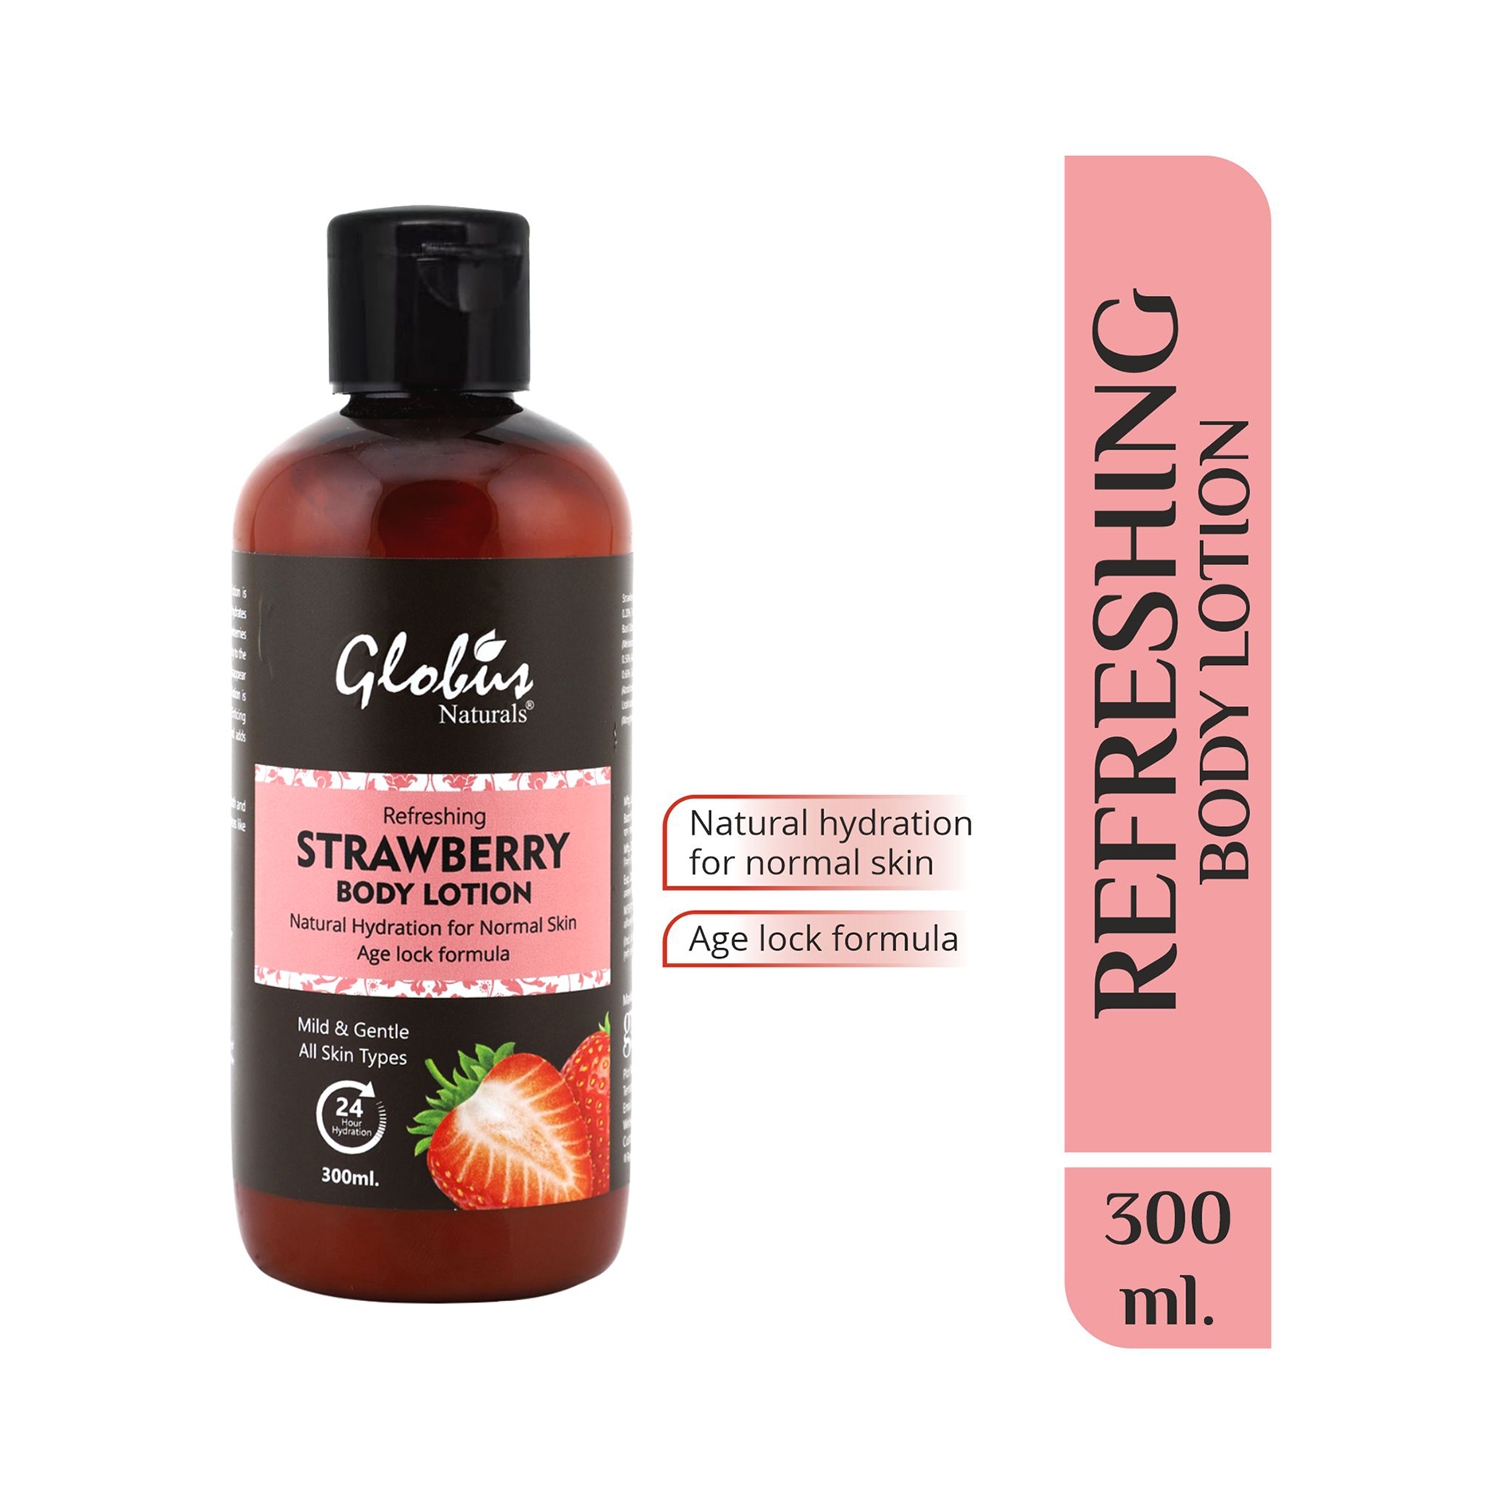 Globus Naturals | Globus Naturals Refreshing Strawberry Body Lotion (300ml)